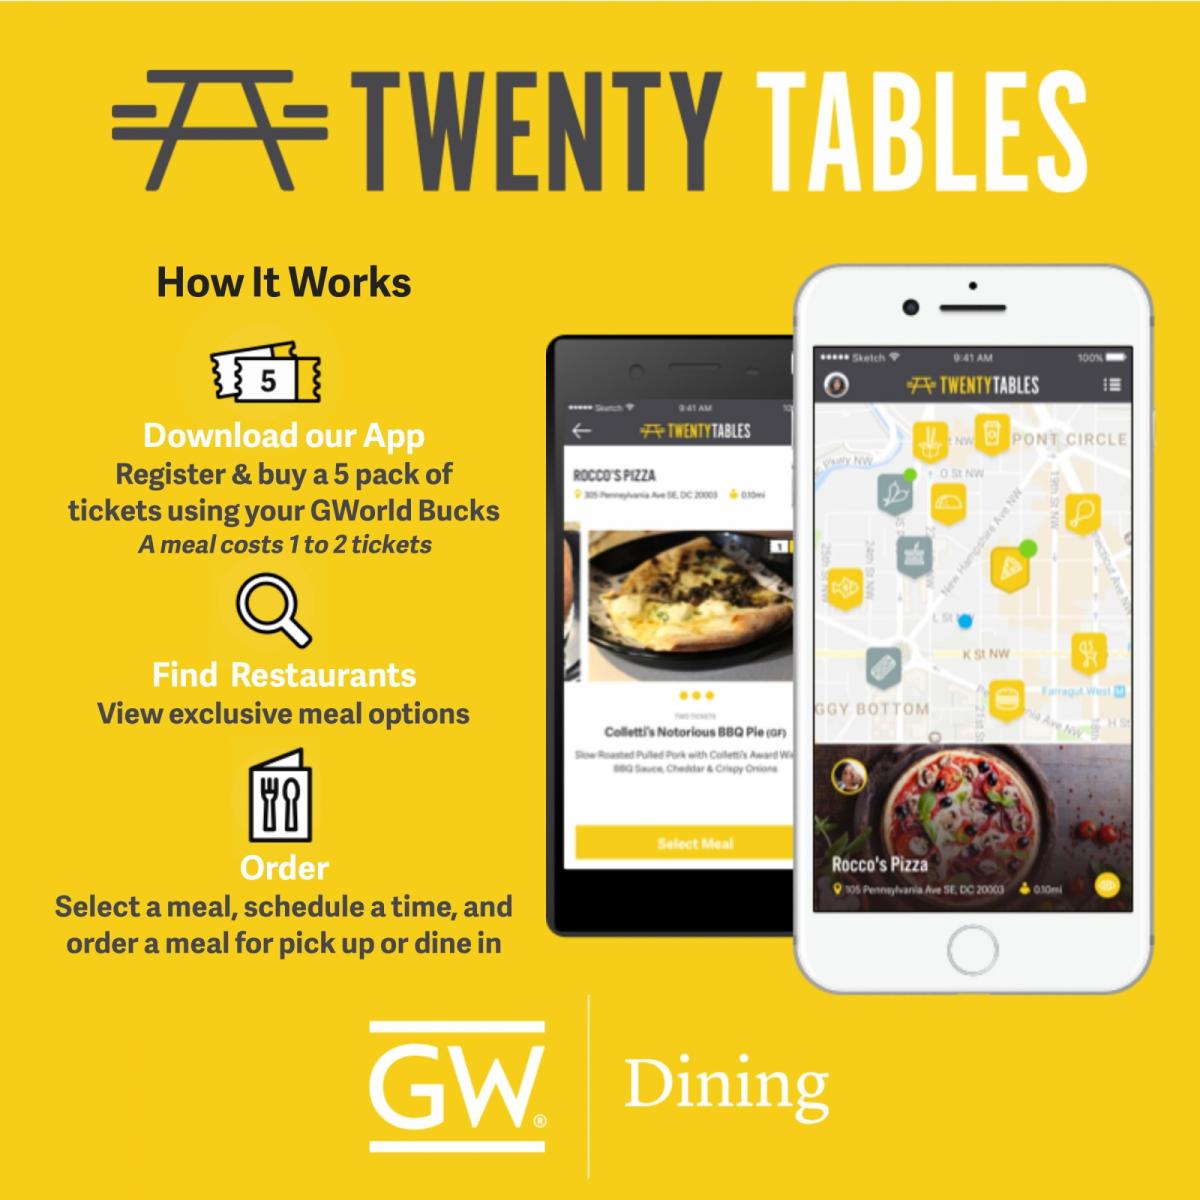 twenty-tables-gw-social-media-graphic-1.jpg